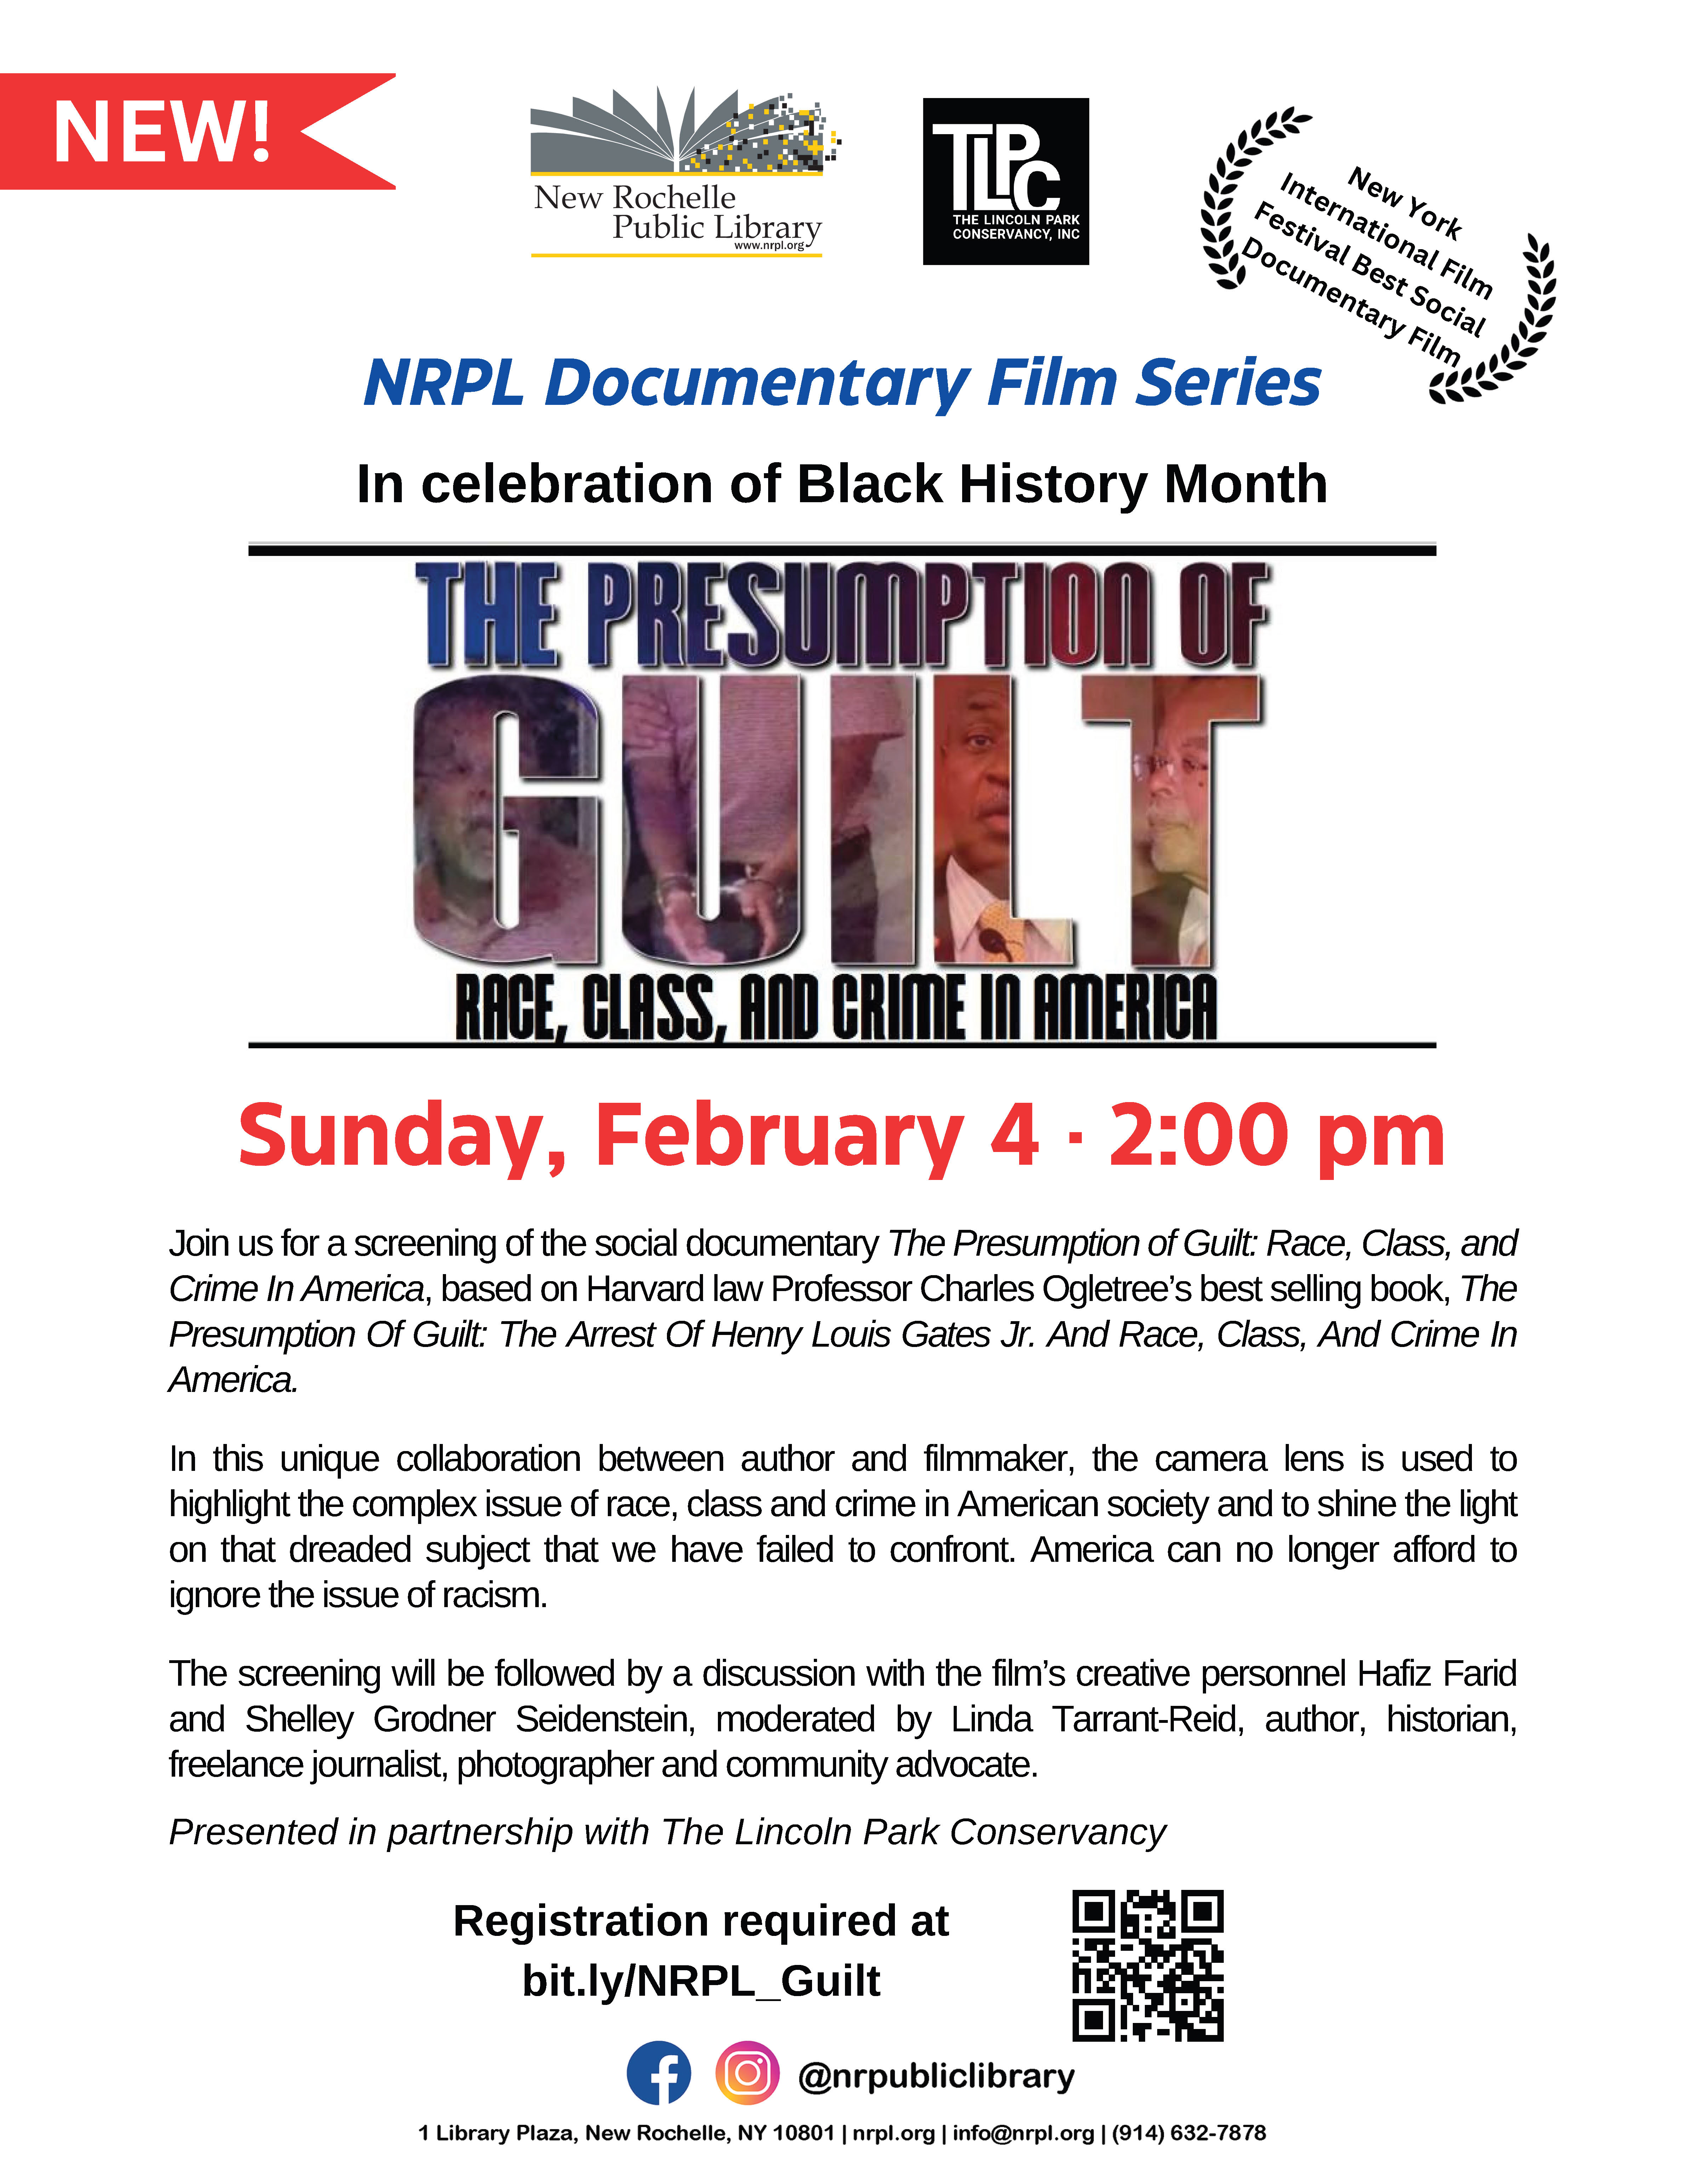 Film & Discussion: Presumption of Guilt